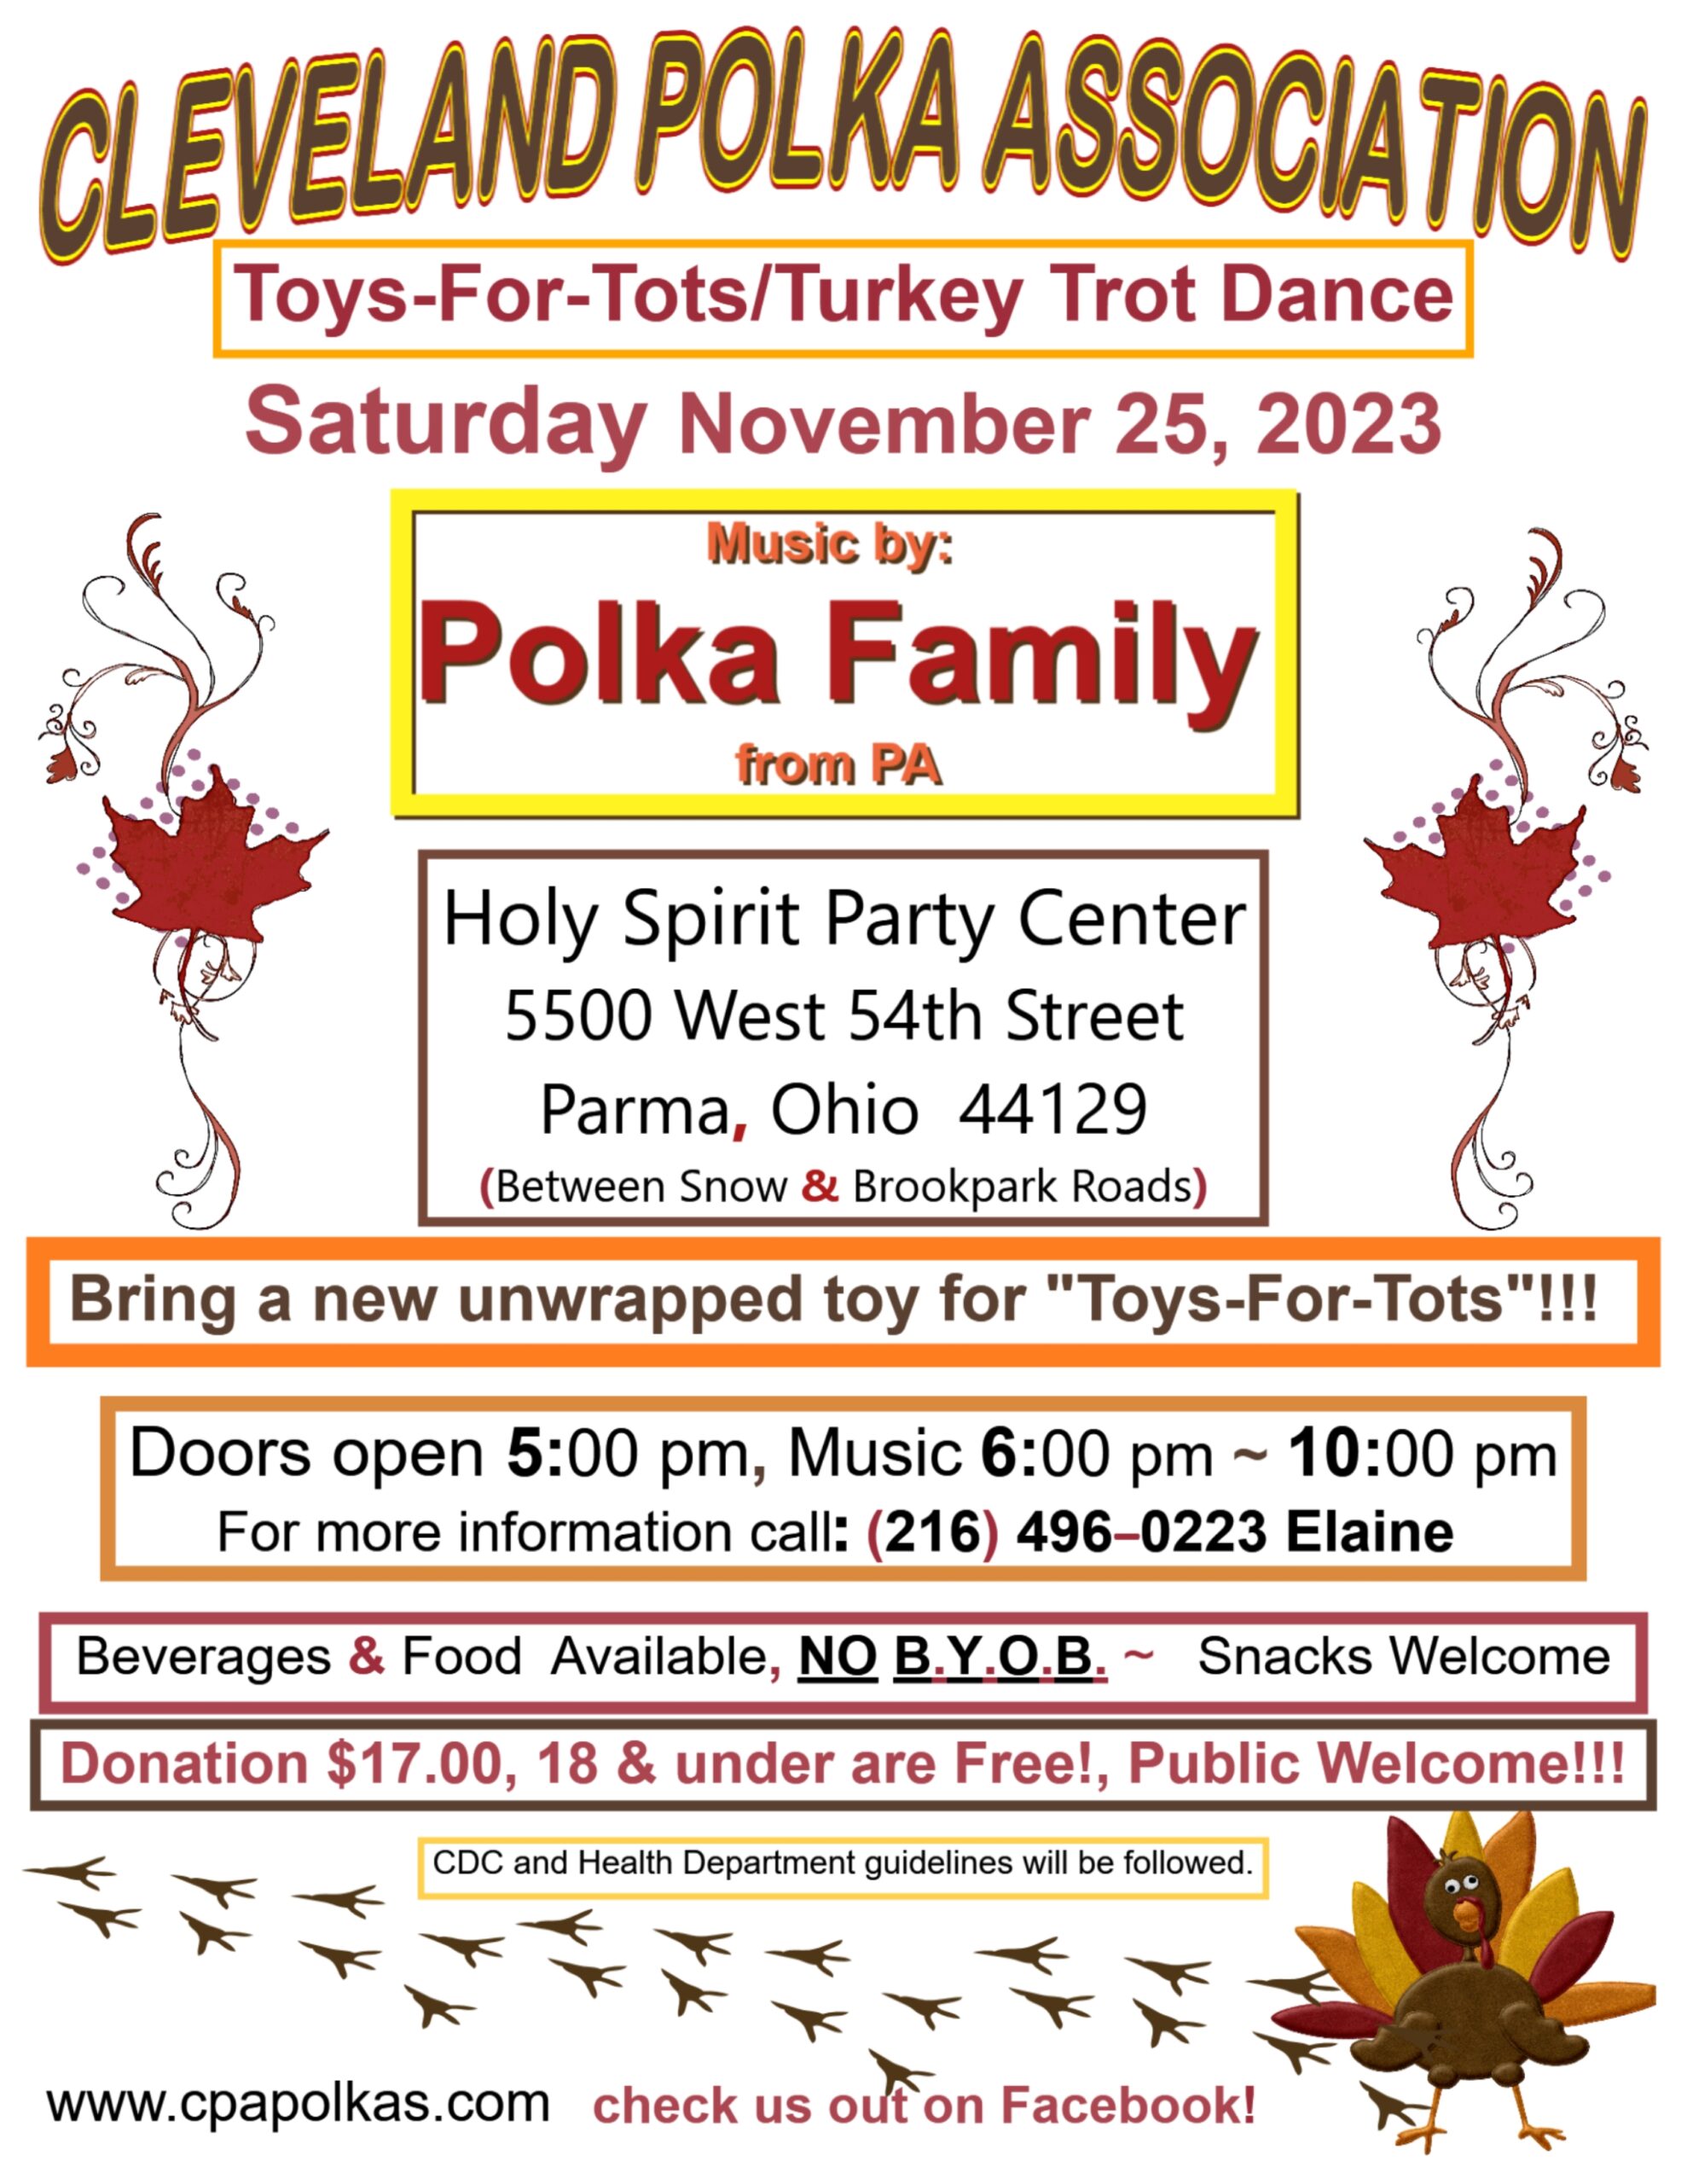 Cleveland Polka Association Toys-For-Tots/Turkey Trot Dance